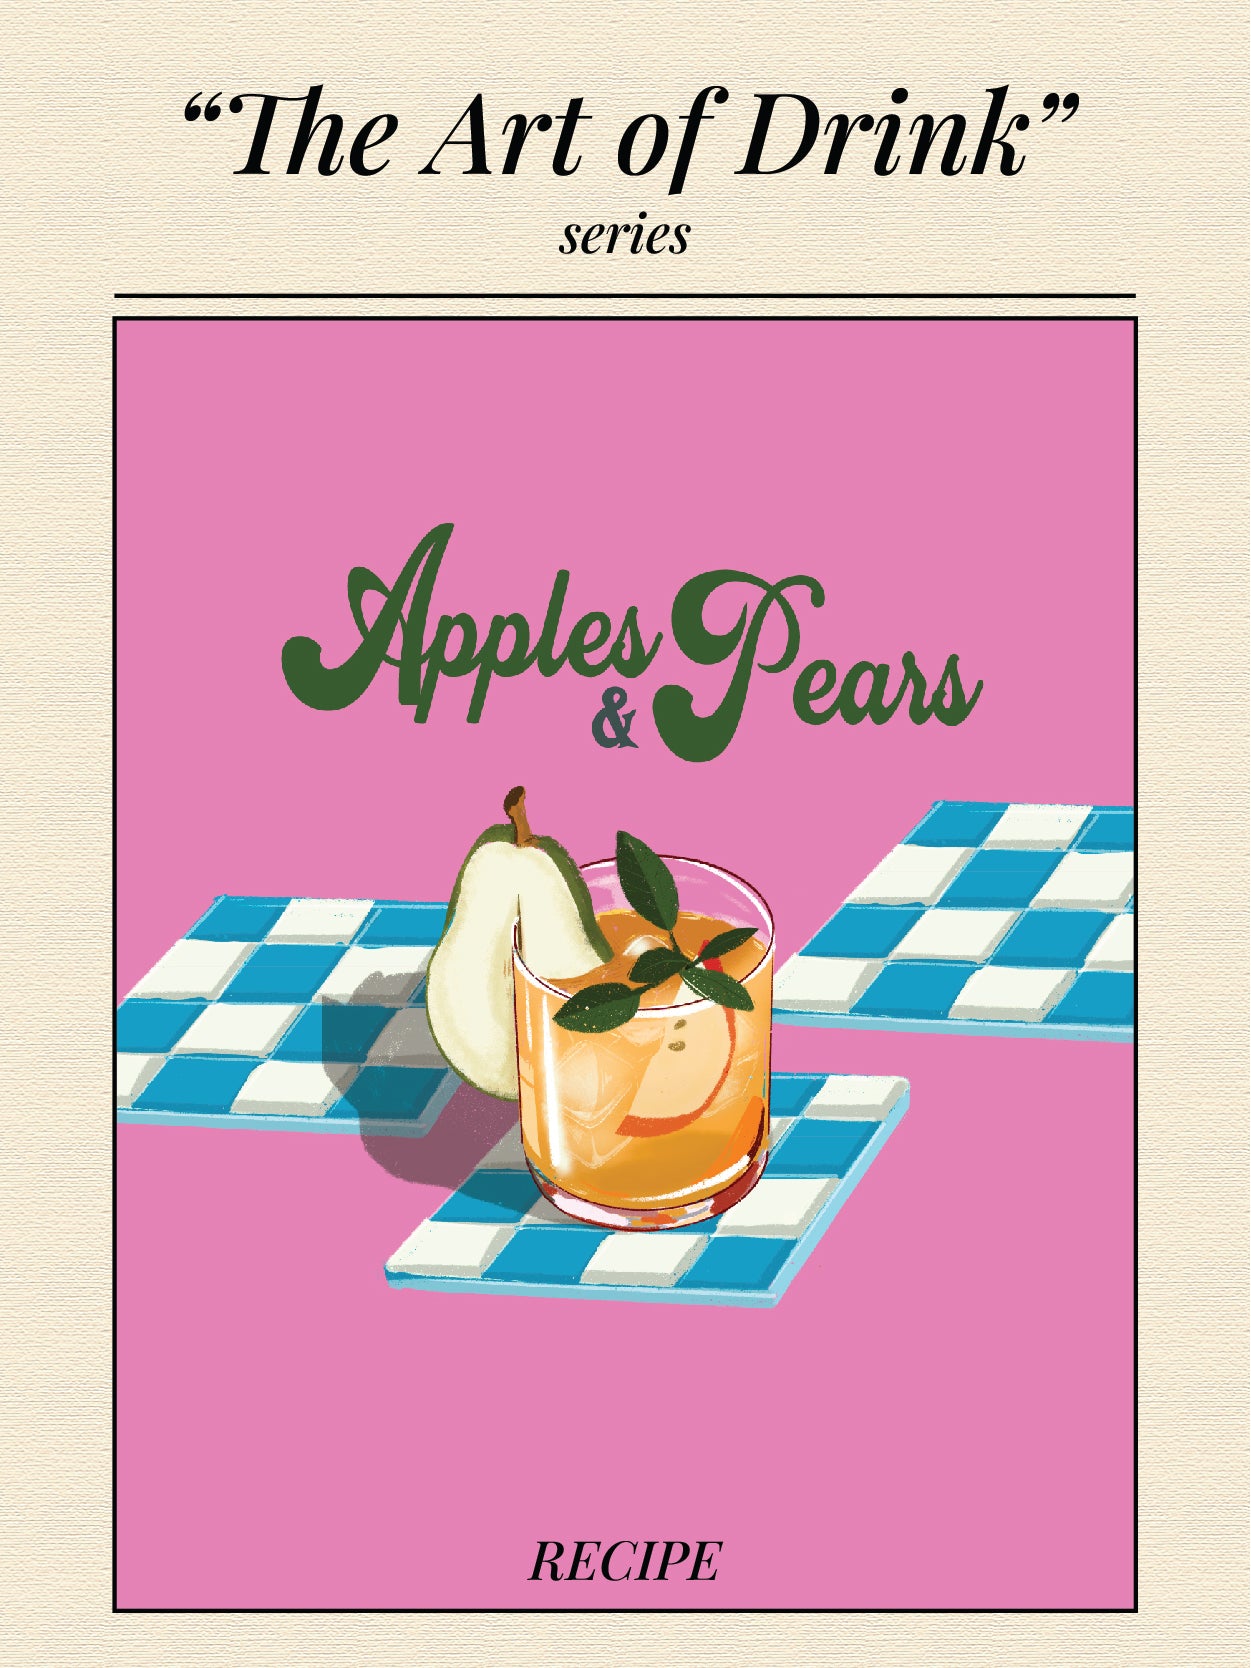 APPLE & PEARS - "The Art of Drink" series